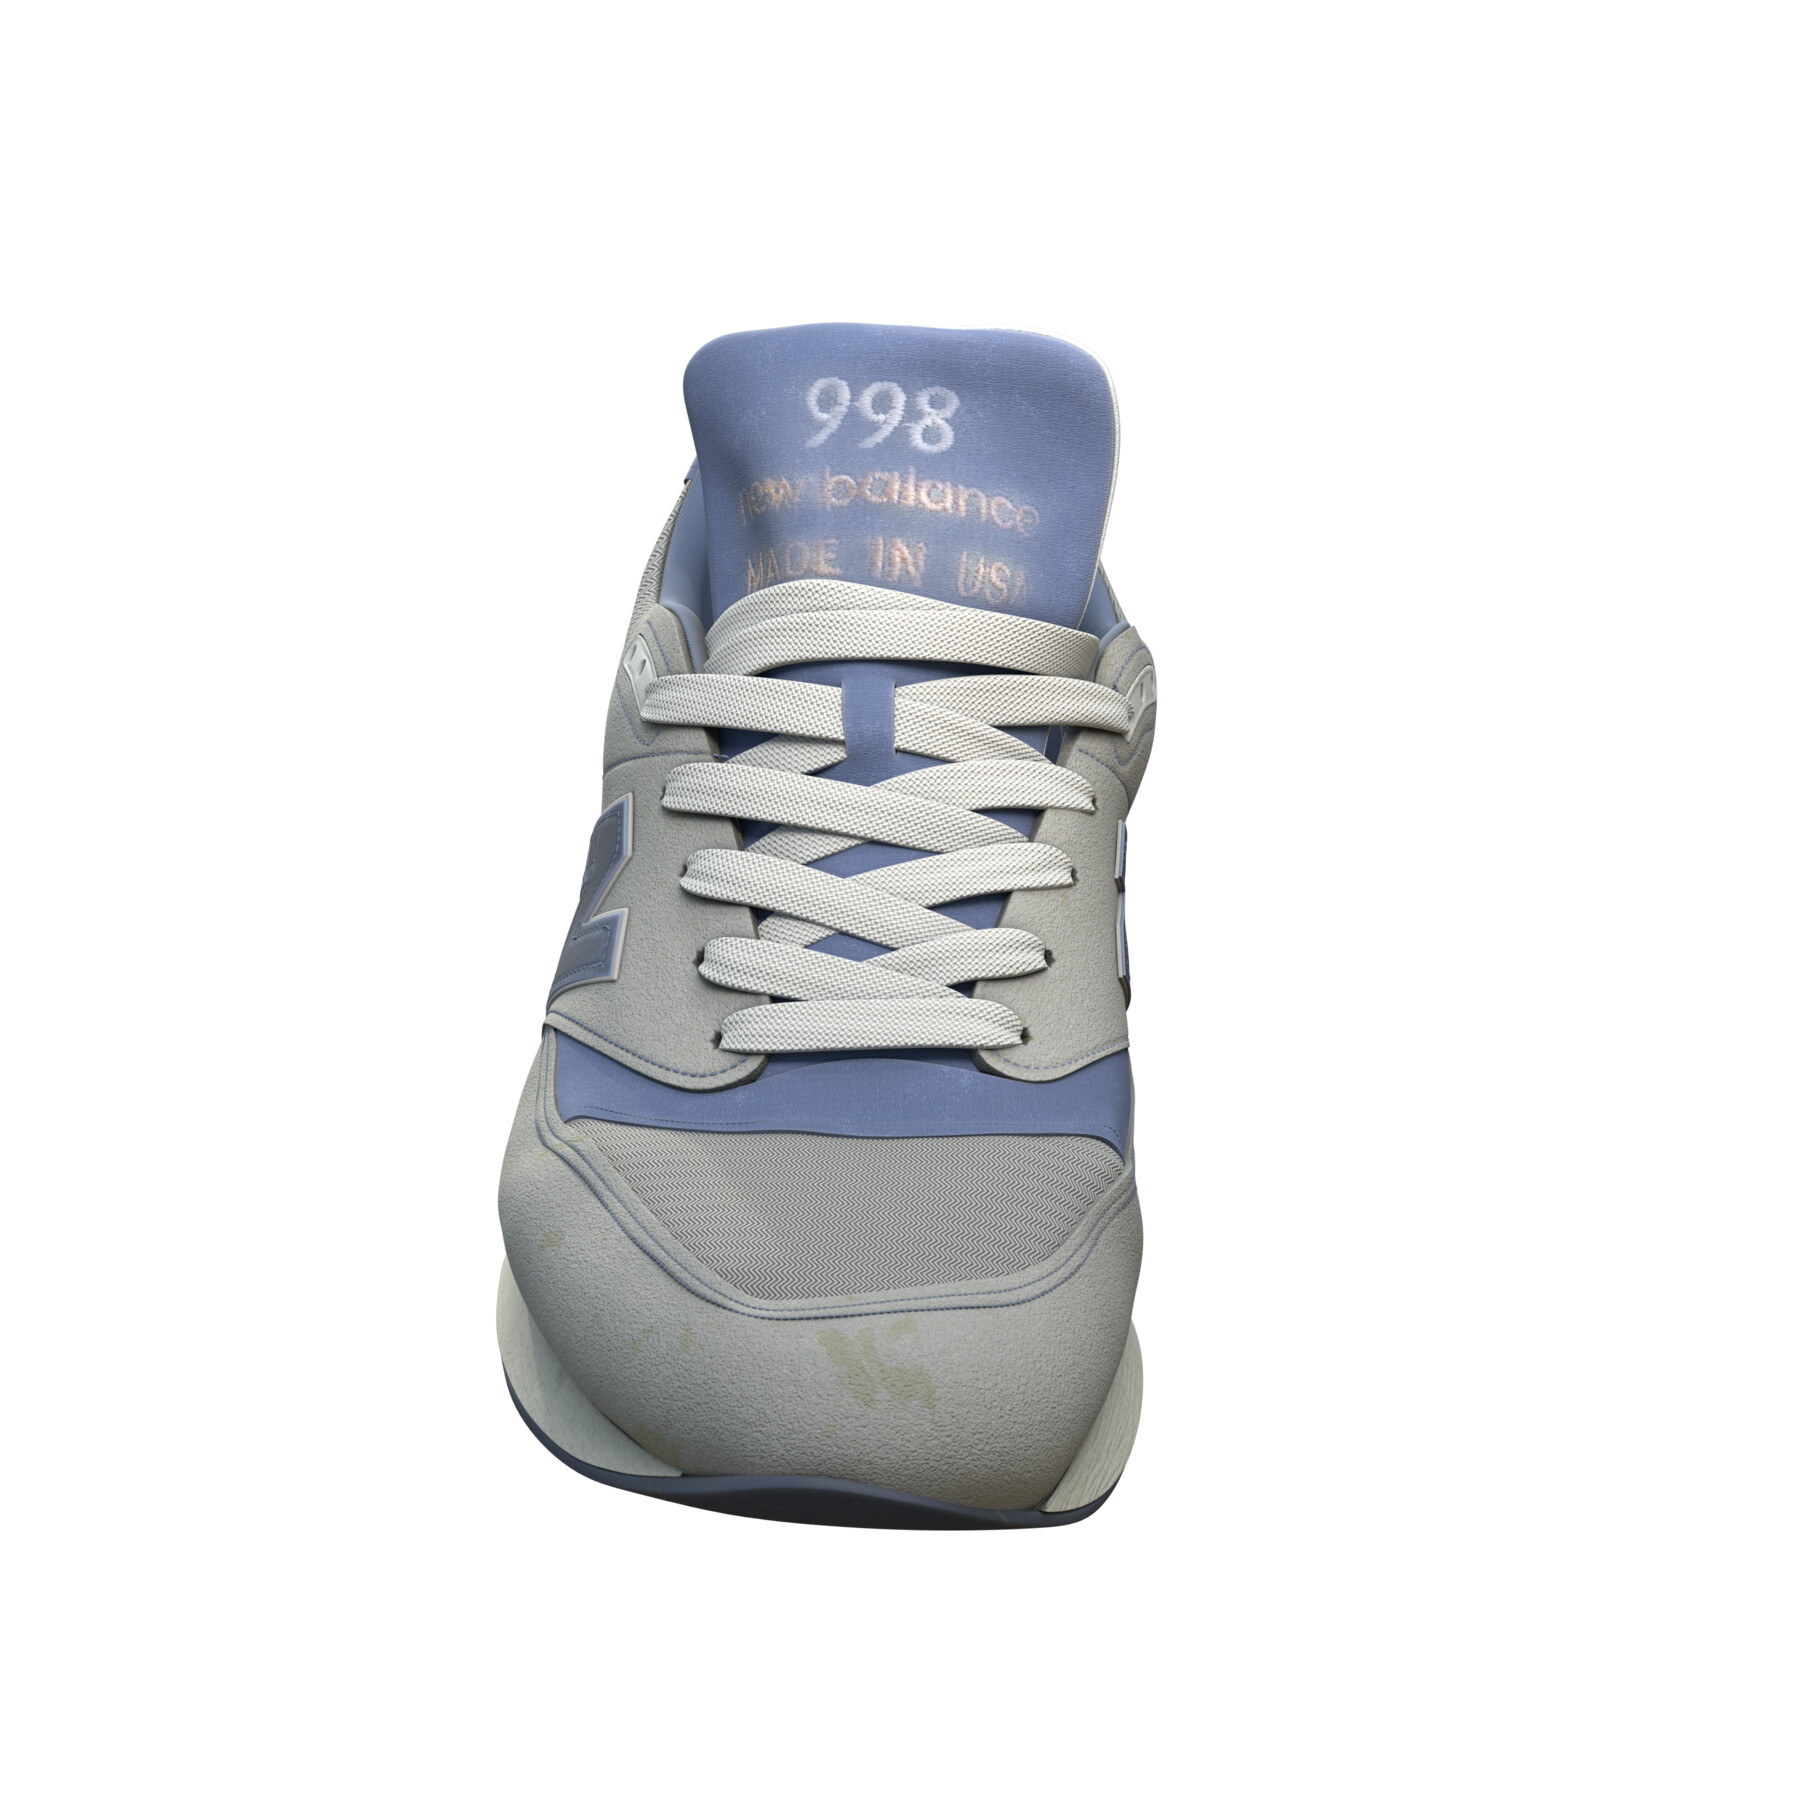 ArtStation - newbalance 998 shoes | Resources